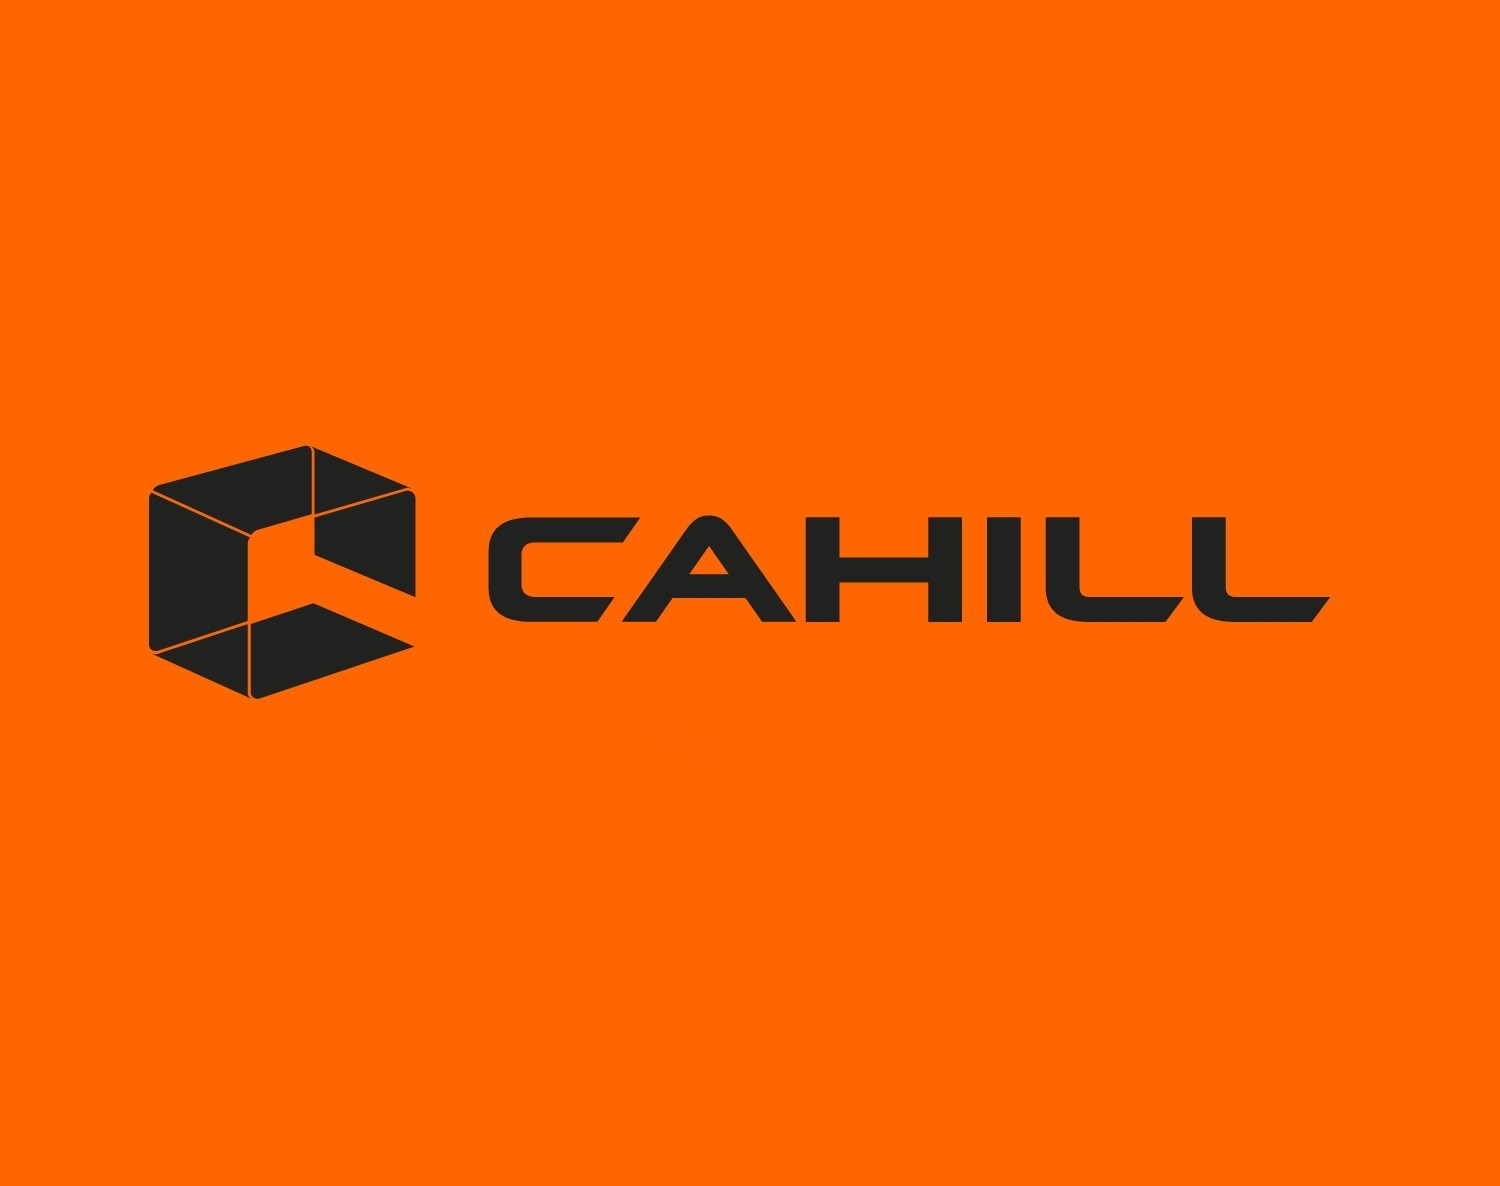 Cahill logo on orange